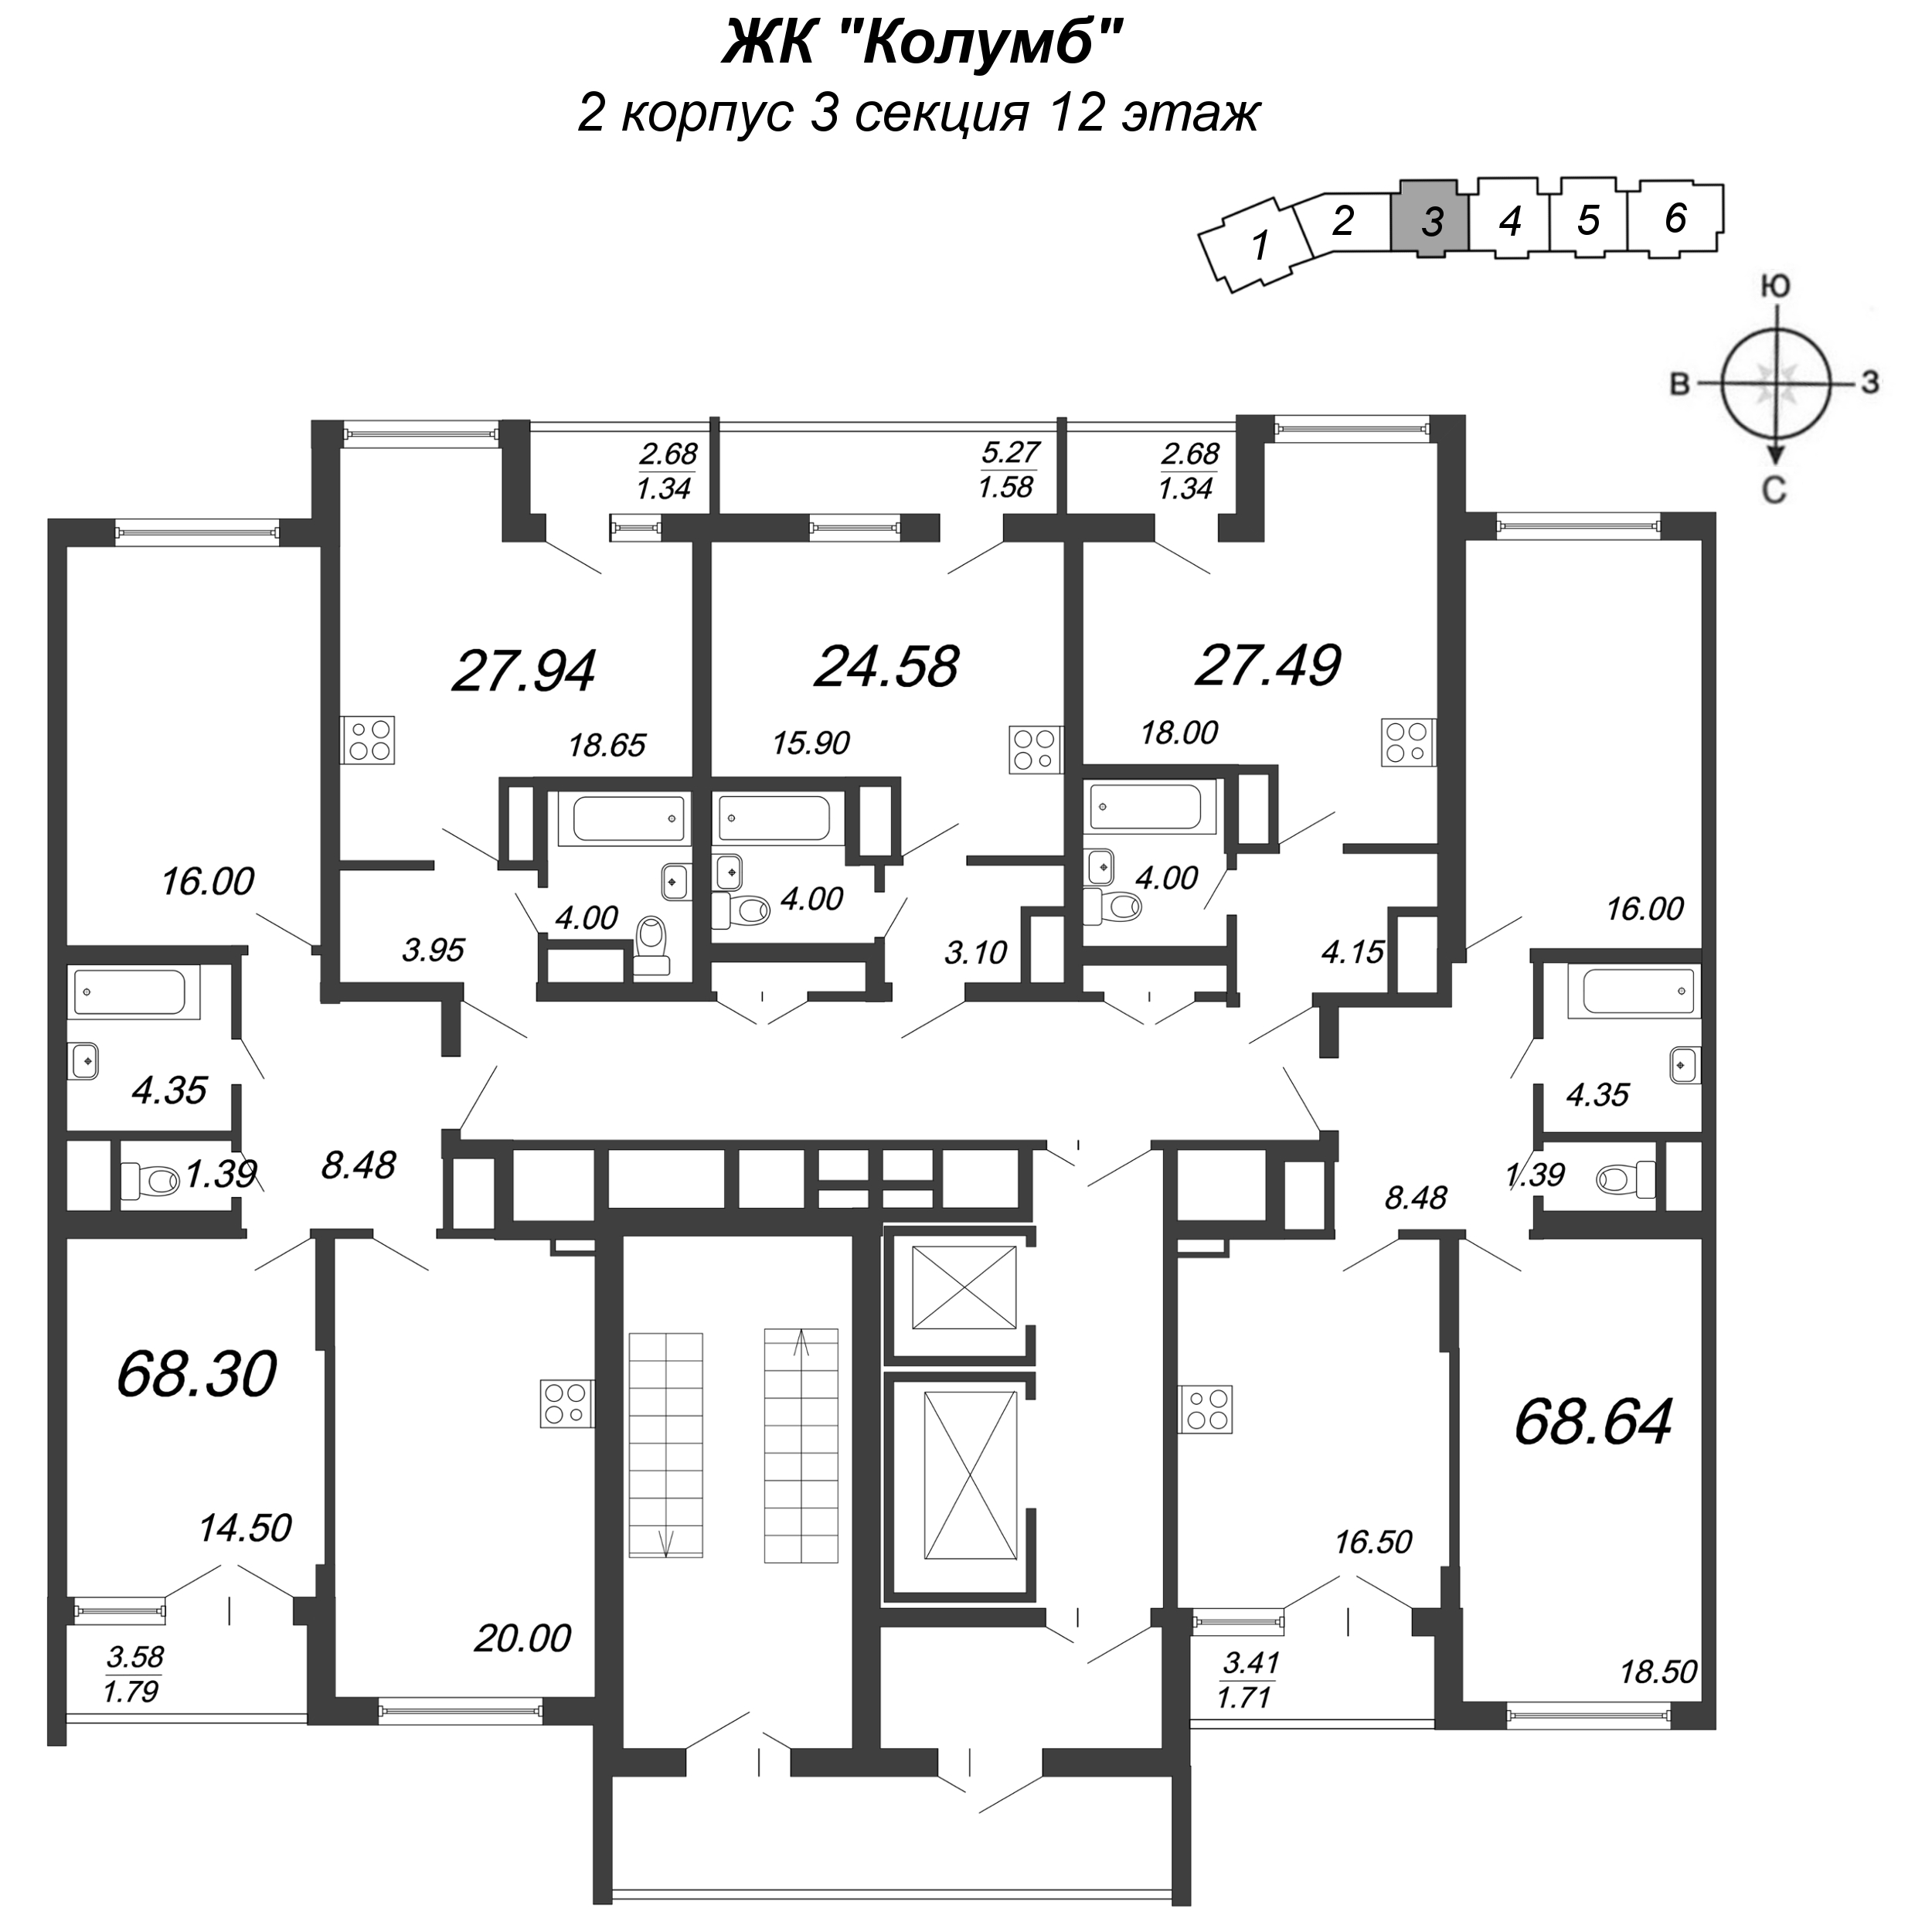 Квартира-студия, 28.3 м² в ЖК "Колумб" - планировка этажа